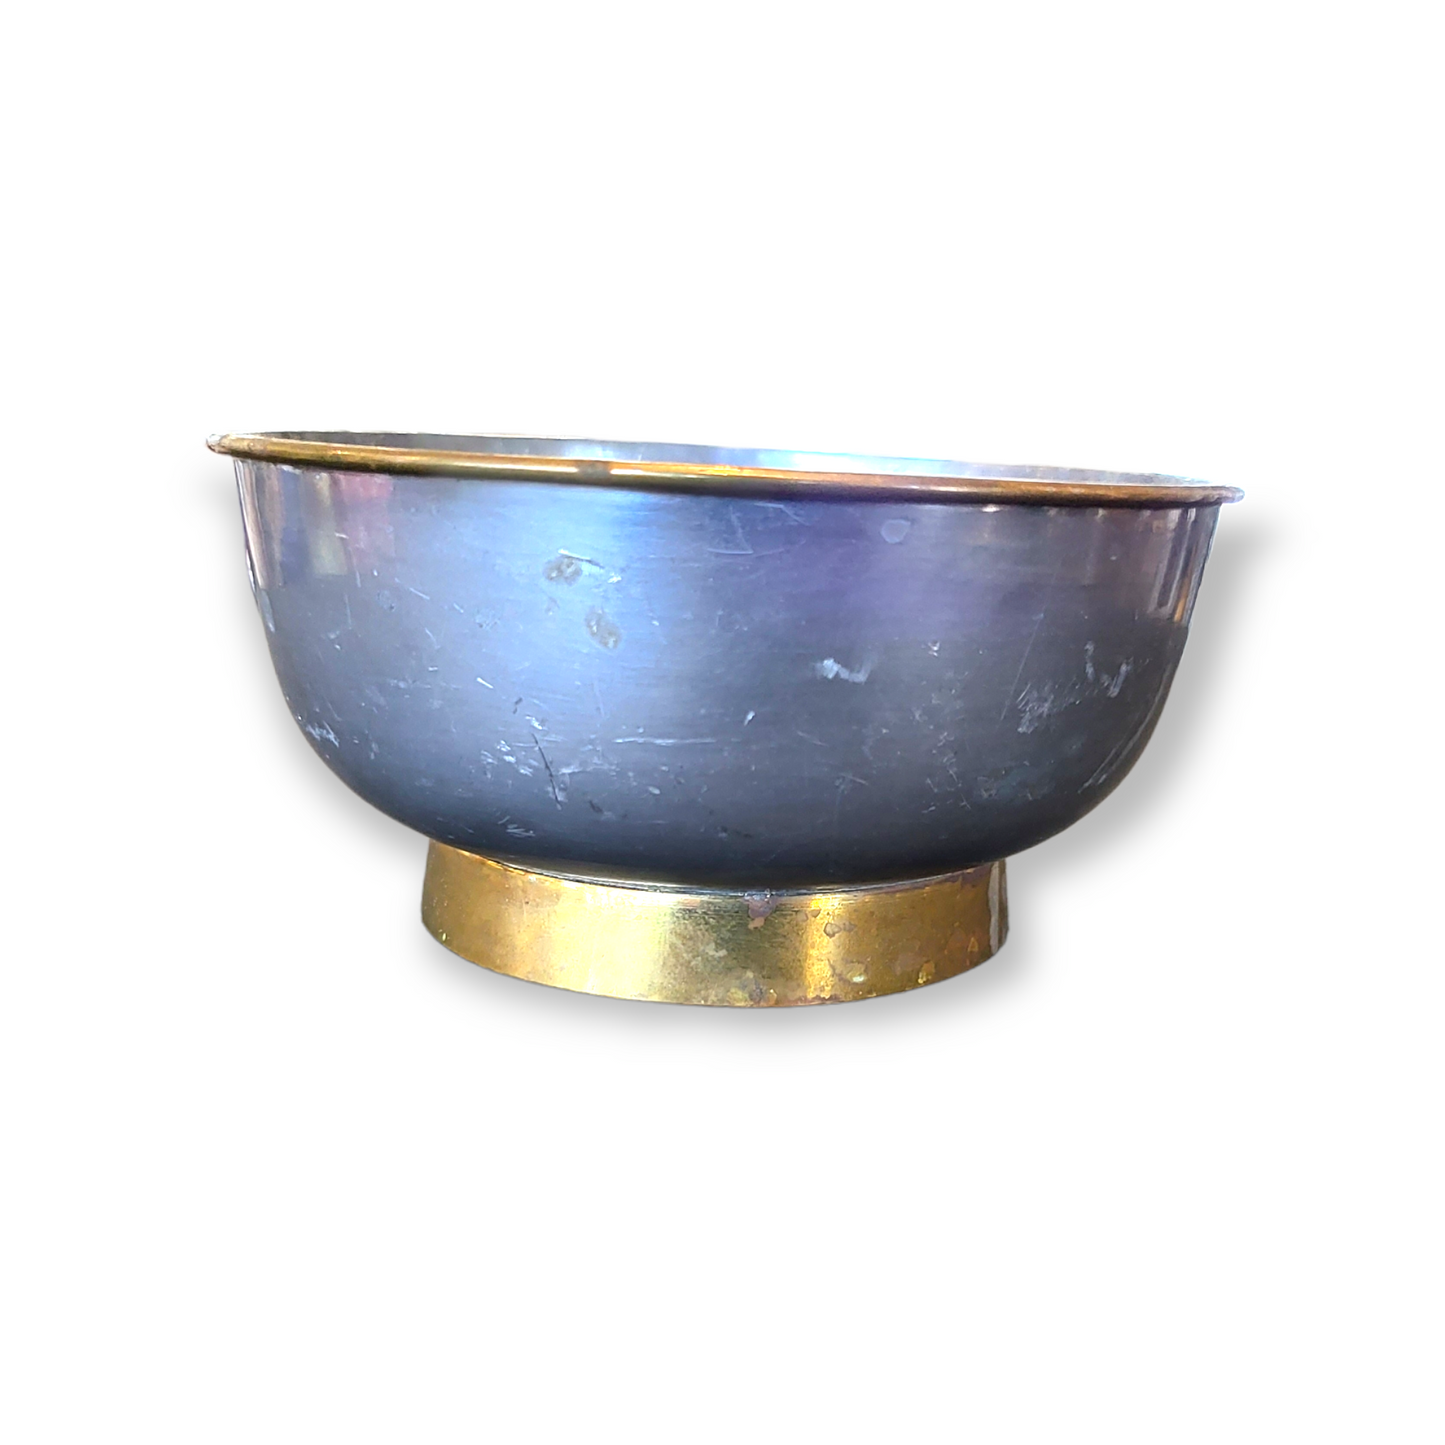 Vintage Asian Pewter Bowl with Brass Floral Design